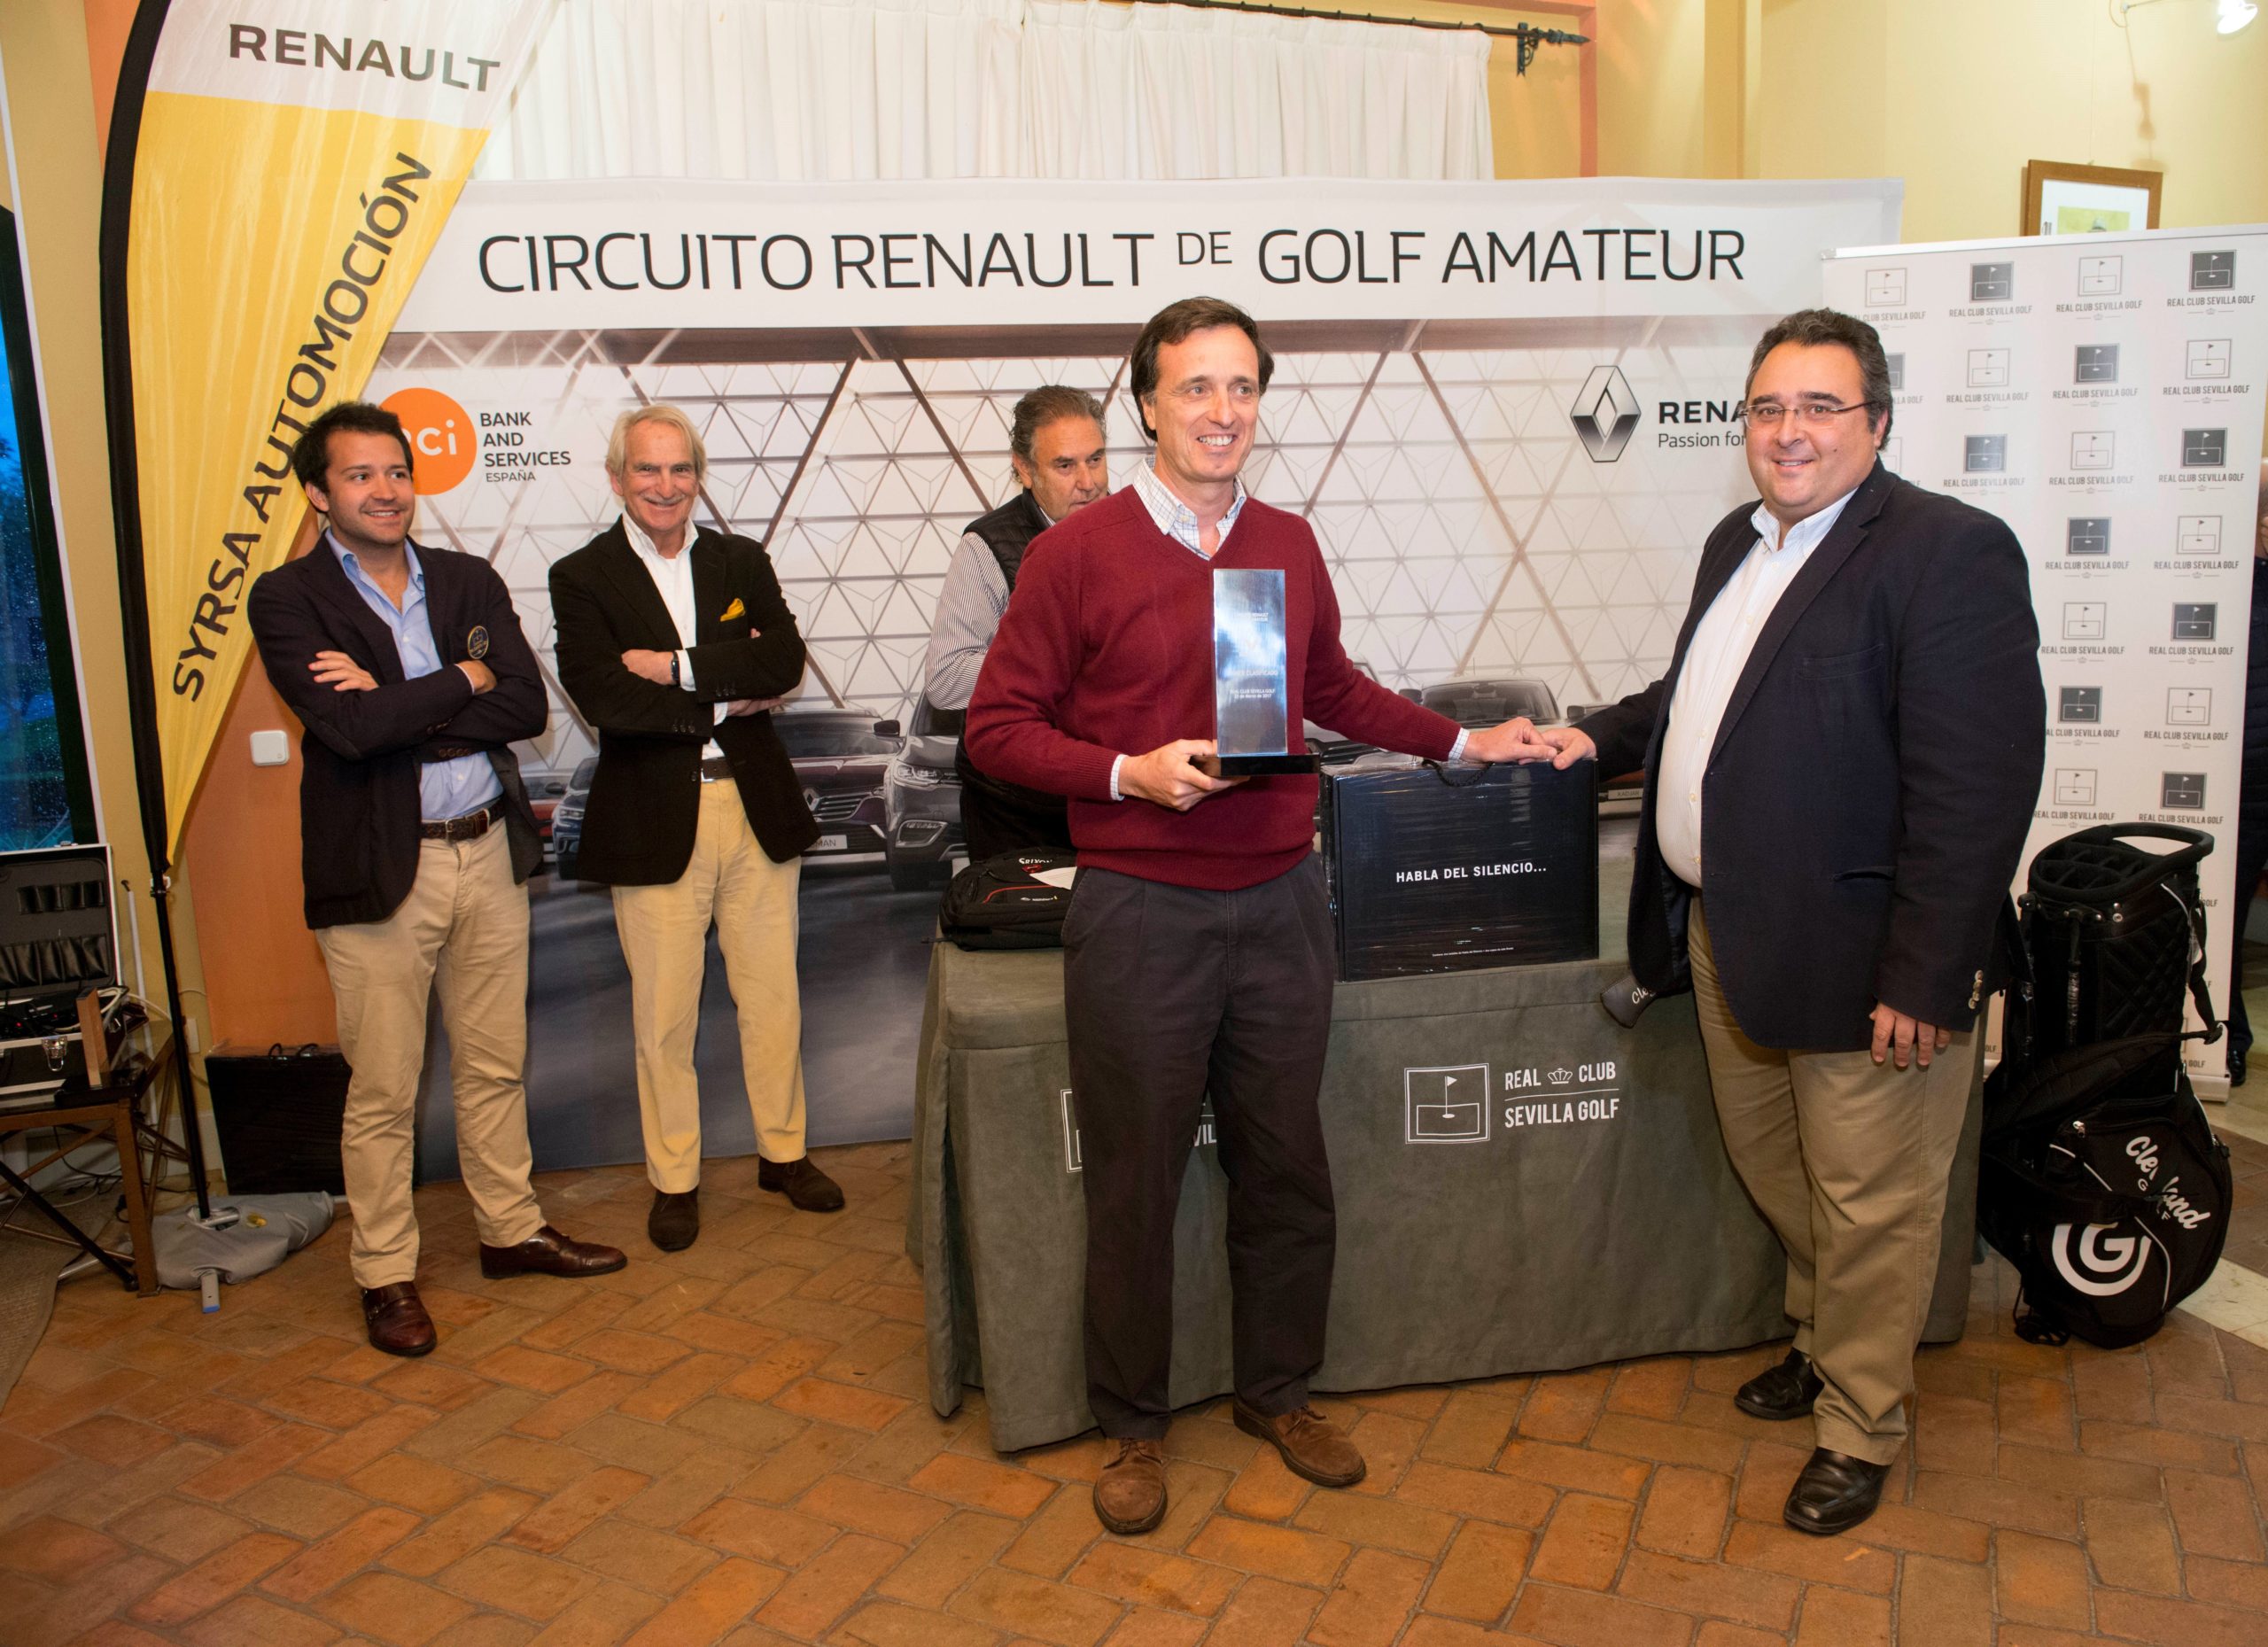 Circuito de Golf Amateur Renault-RCI Banque España, sábado 25 Marzo 2017